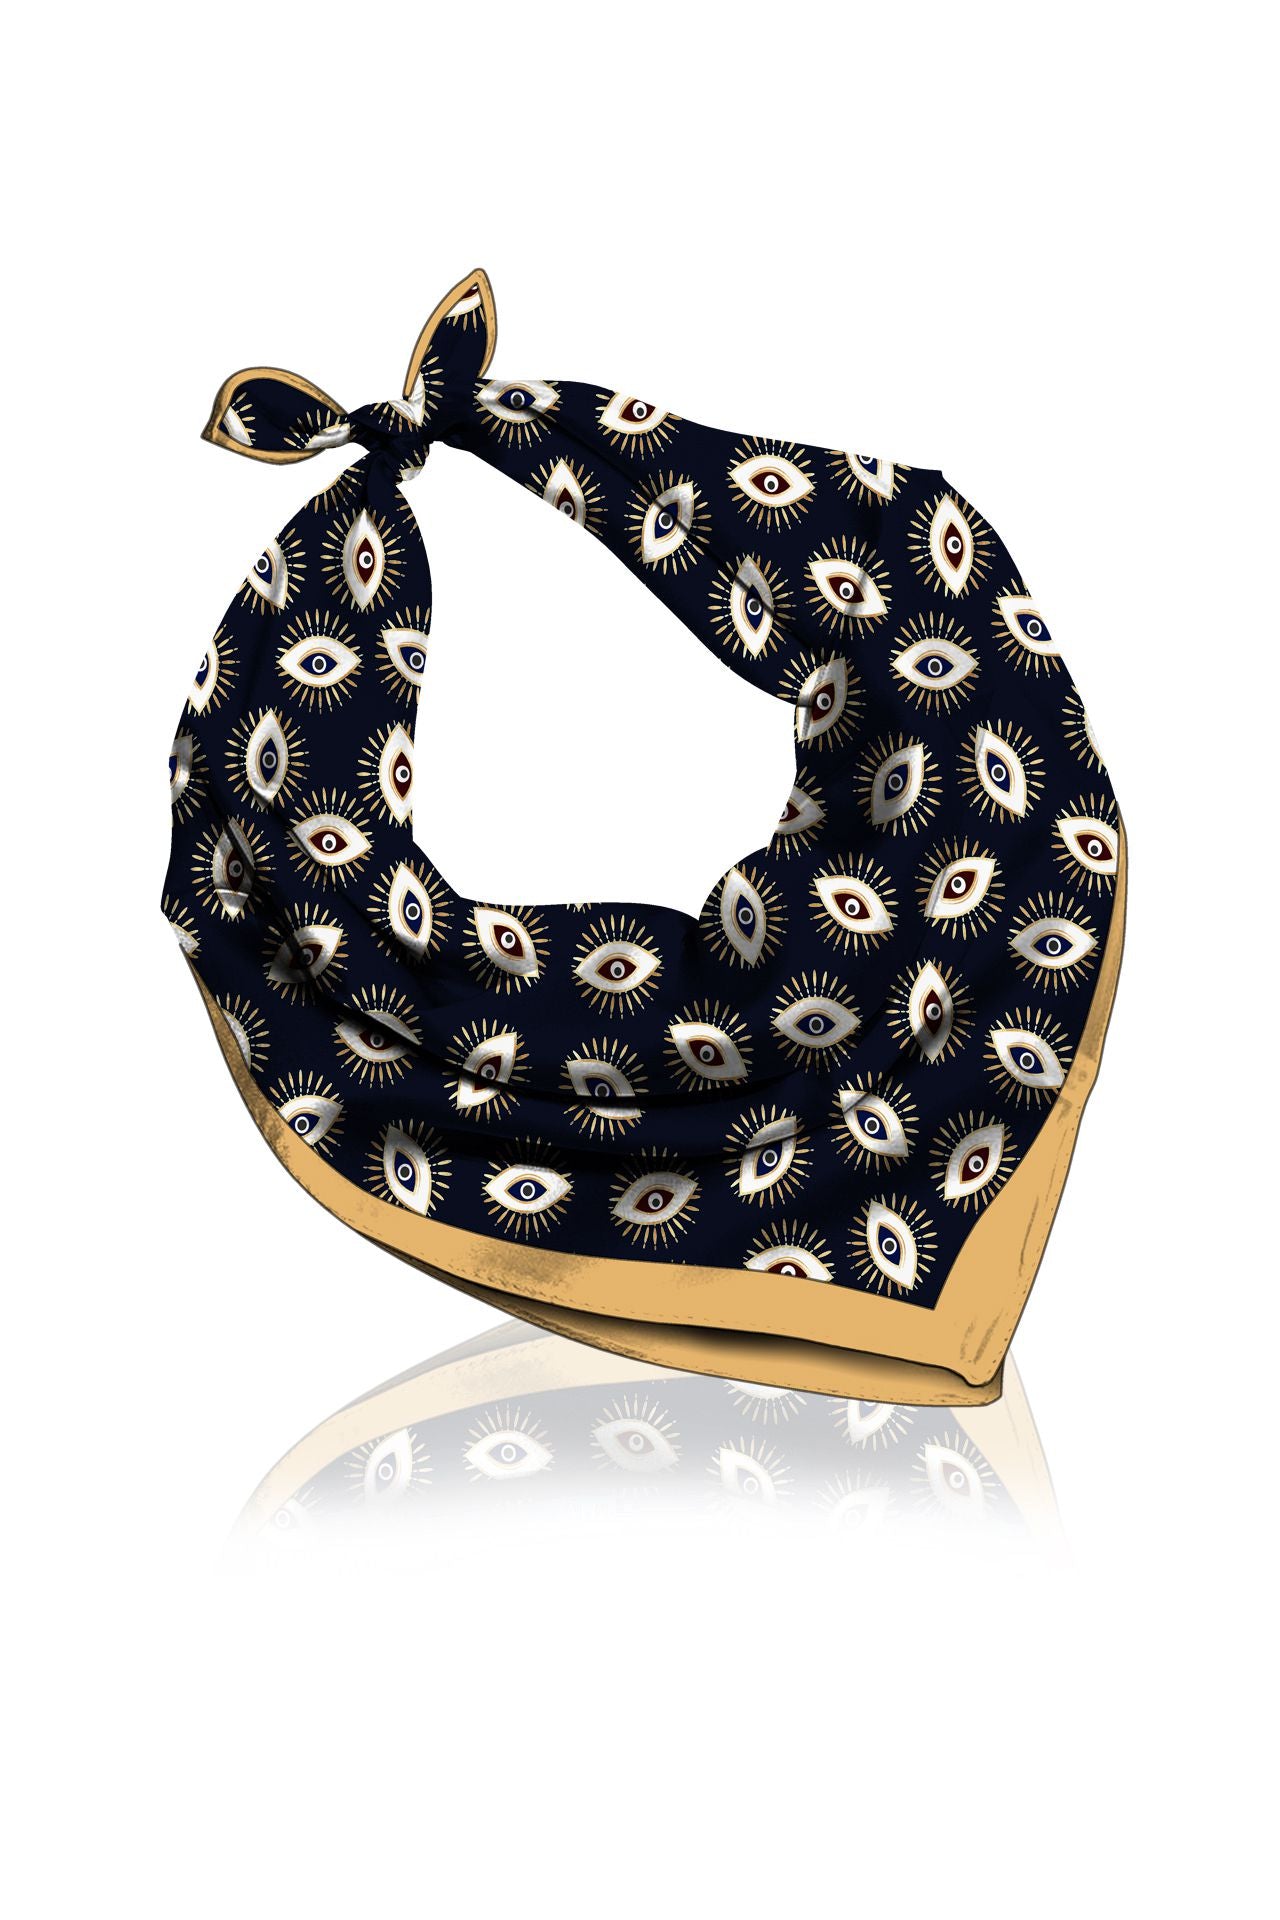 "Kyle X Shahida" "black and white scarf" "scarf print scarf" "black designer scarf"